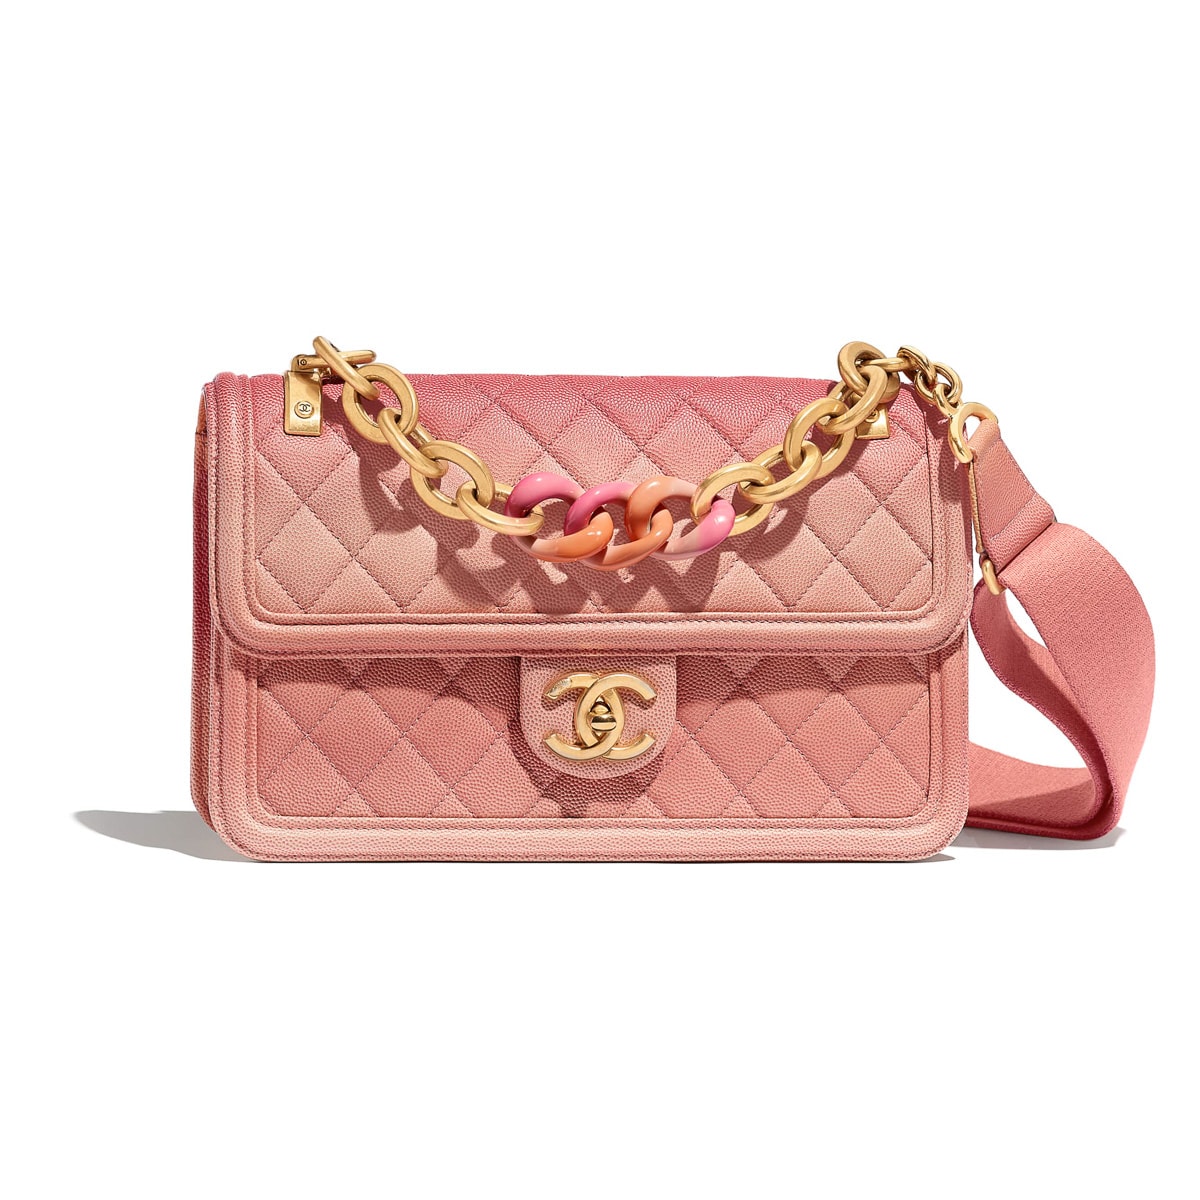 Chanel Spring Summer 2019 Seasonal Bag Collection Act 1